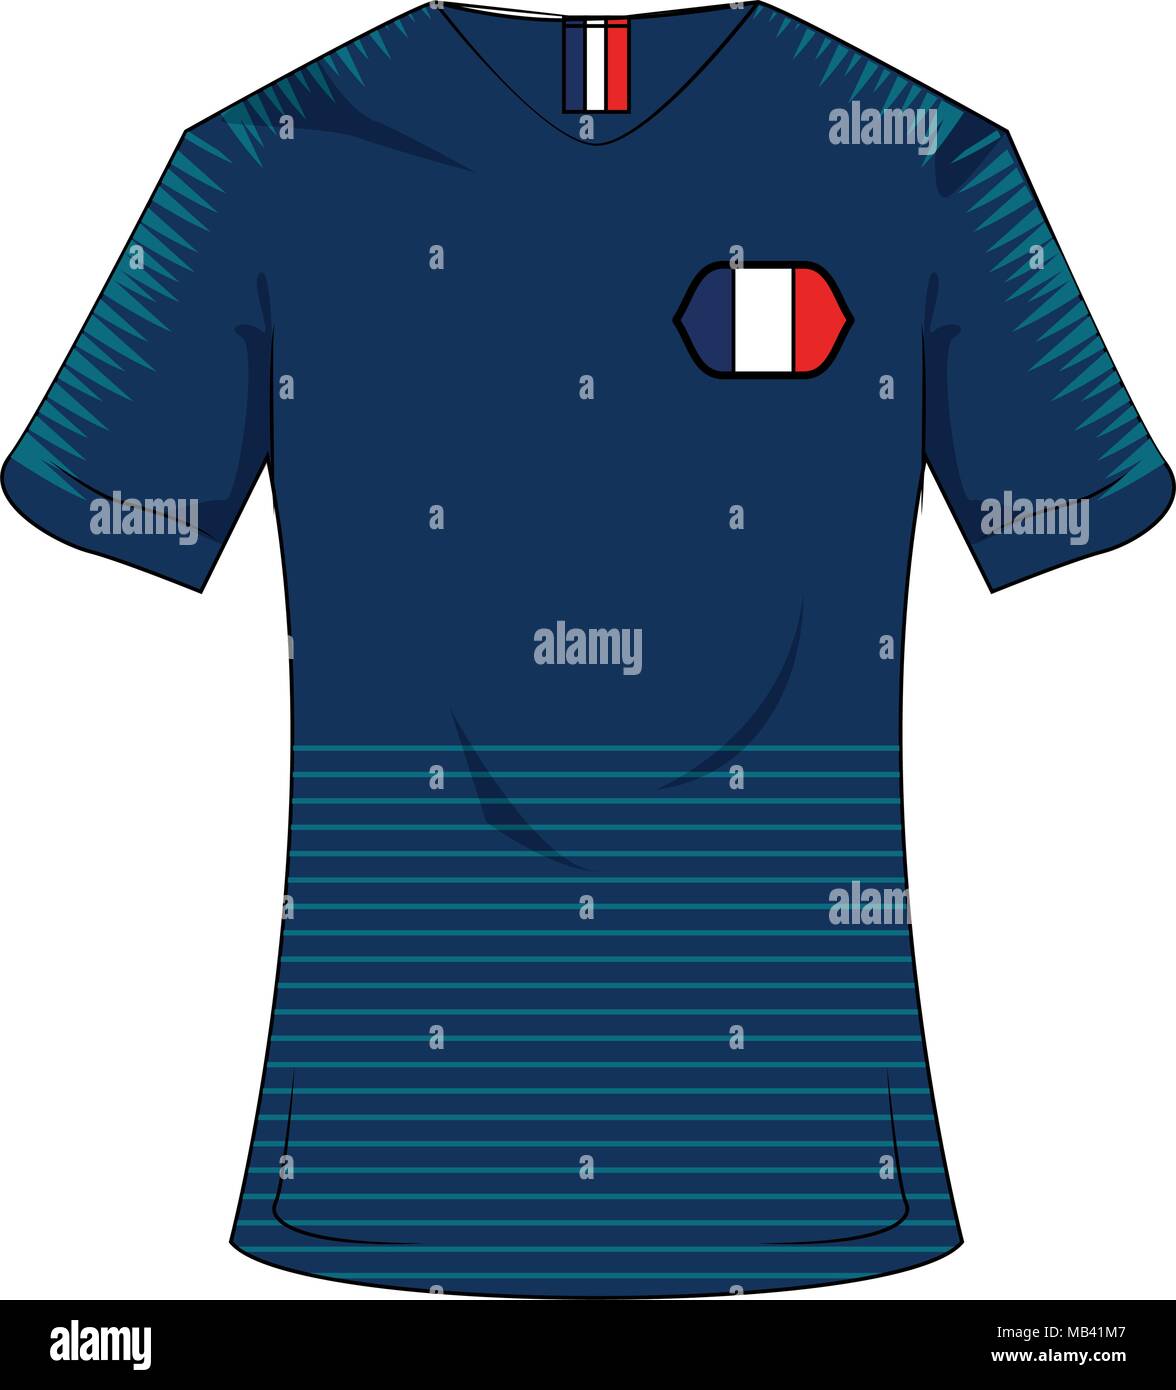 Ropa deportiva de fútbol de Francia Imagen Vector de stock - Alamy